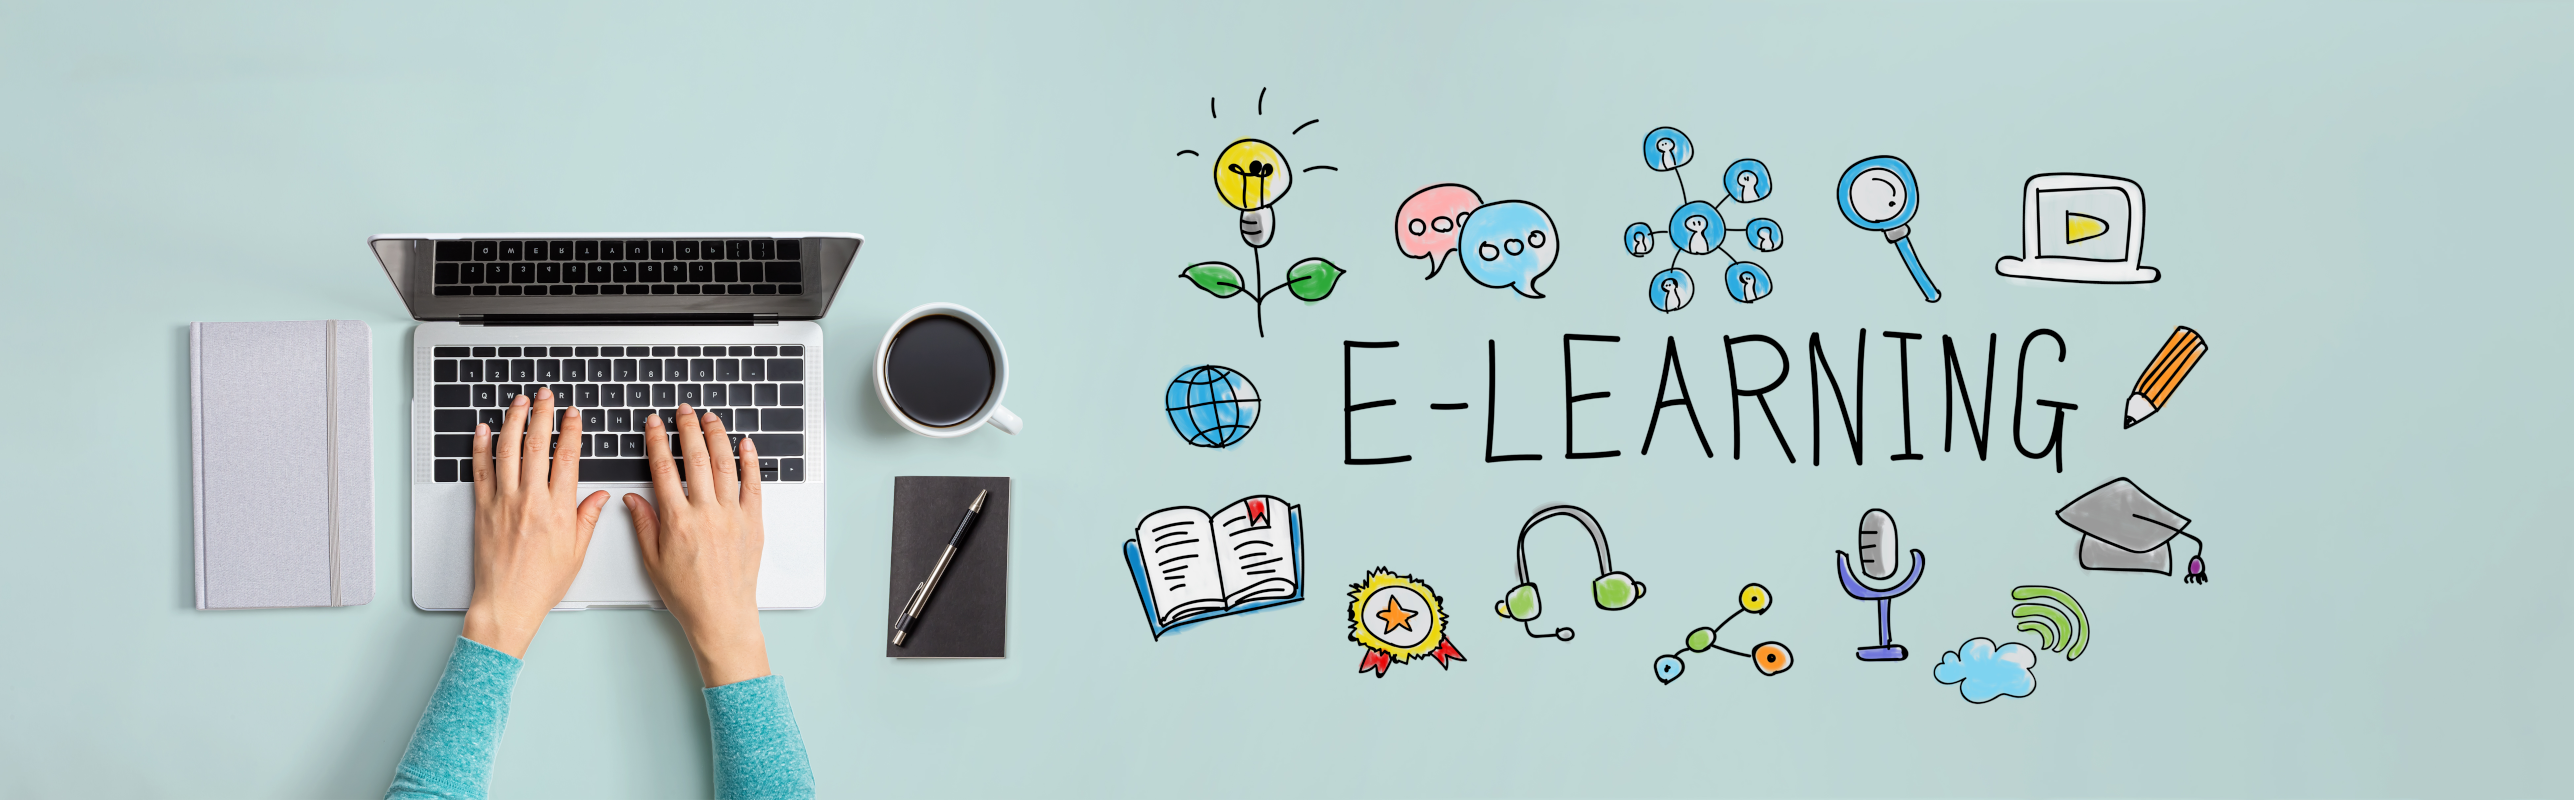 E-Learning, Blended Learning, LMS, Online Training, Web Based Training